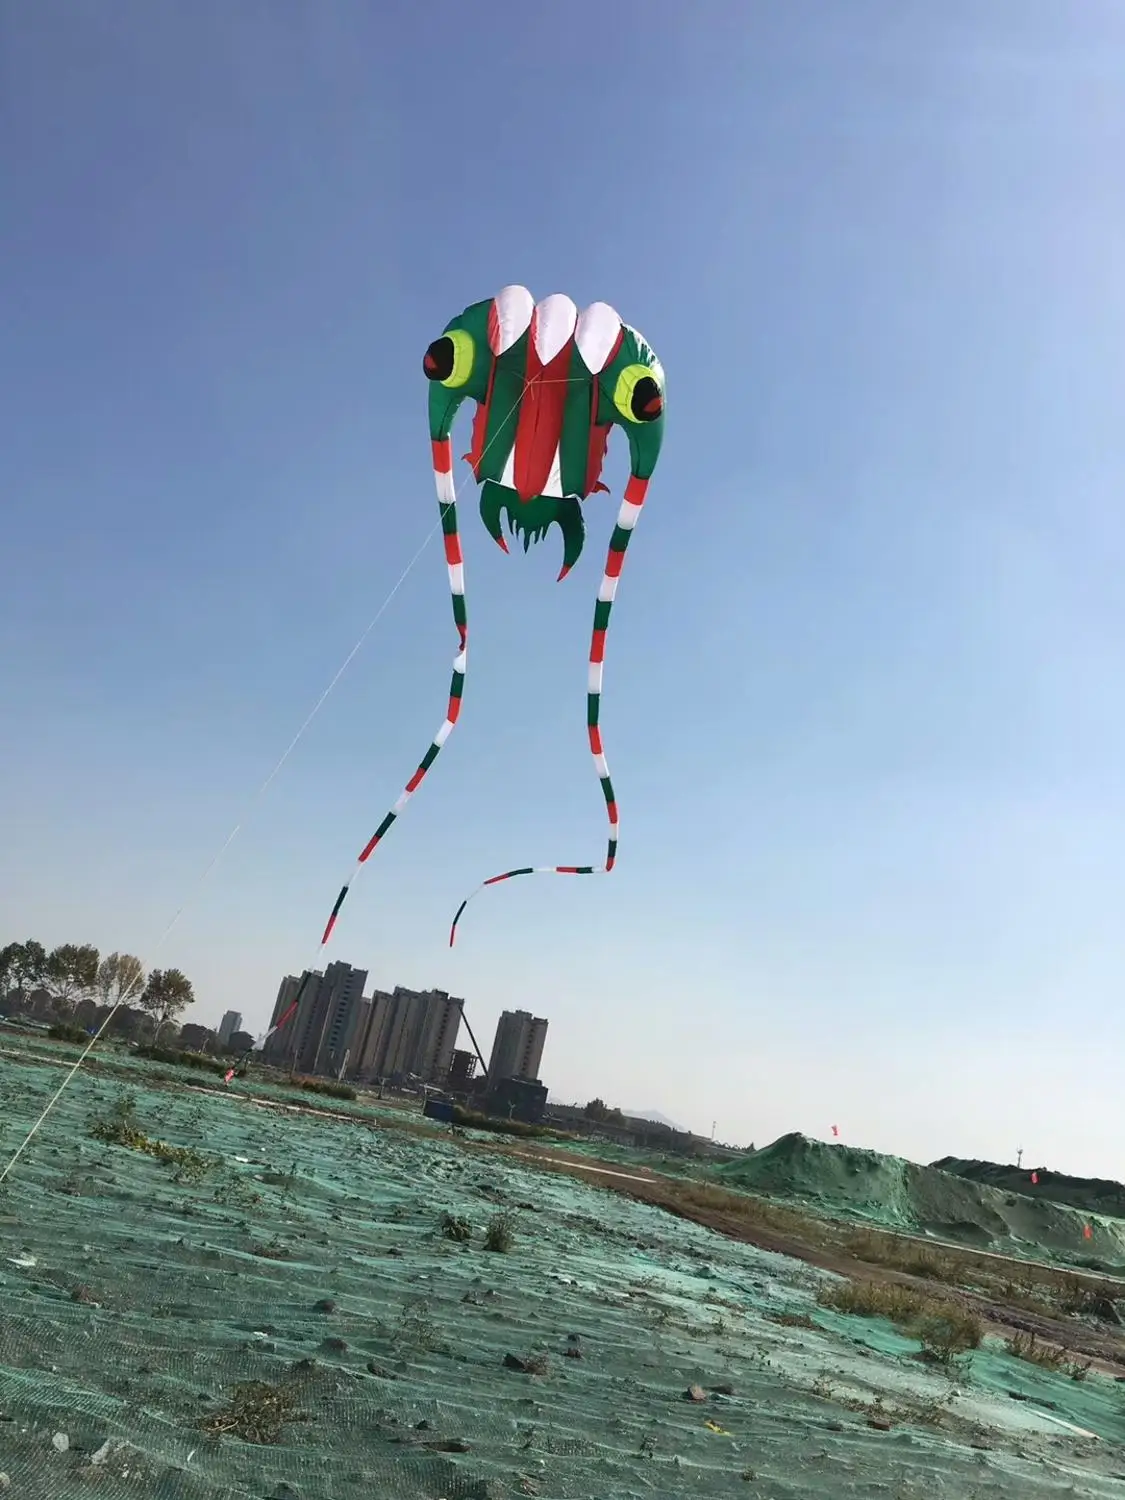 

big kites for adults single line kite ripstop nylon fabric vliegers flying kite weather vane trilobite kite soft pulpo windsock